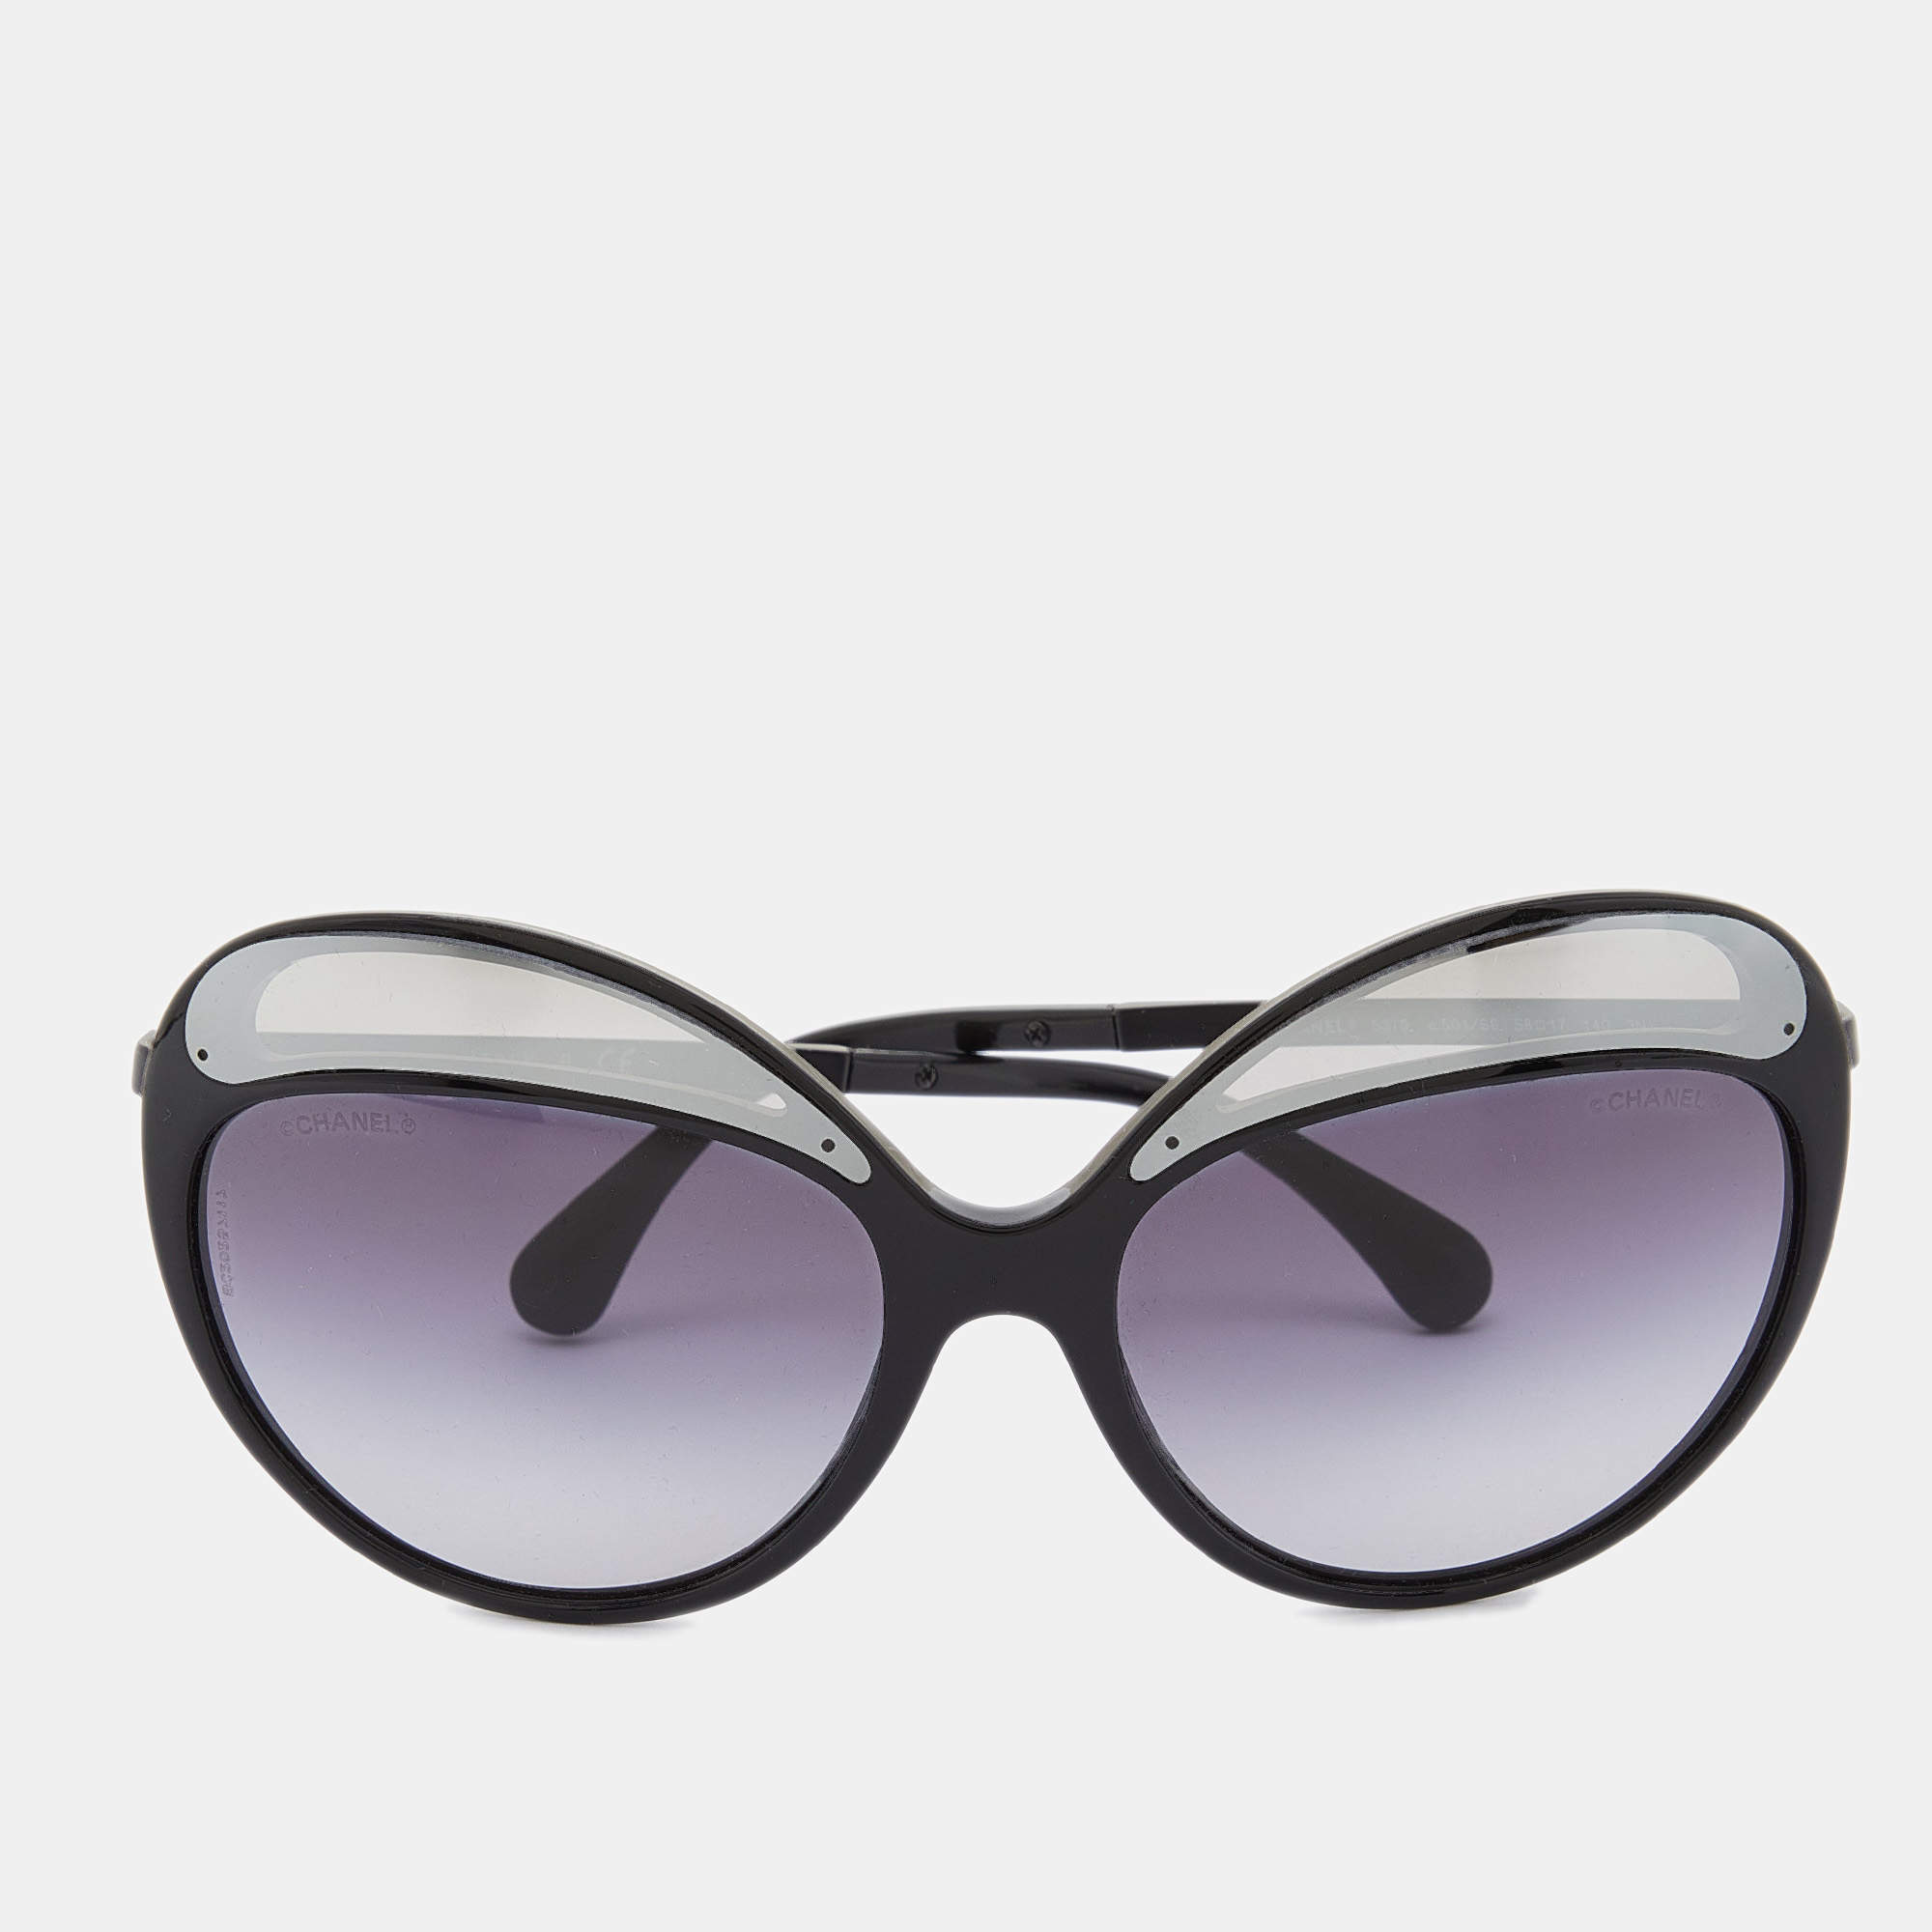 Chanel Black/Grey 5379 Butterfly Sunglasses Chanel